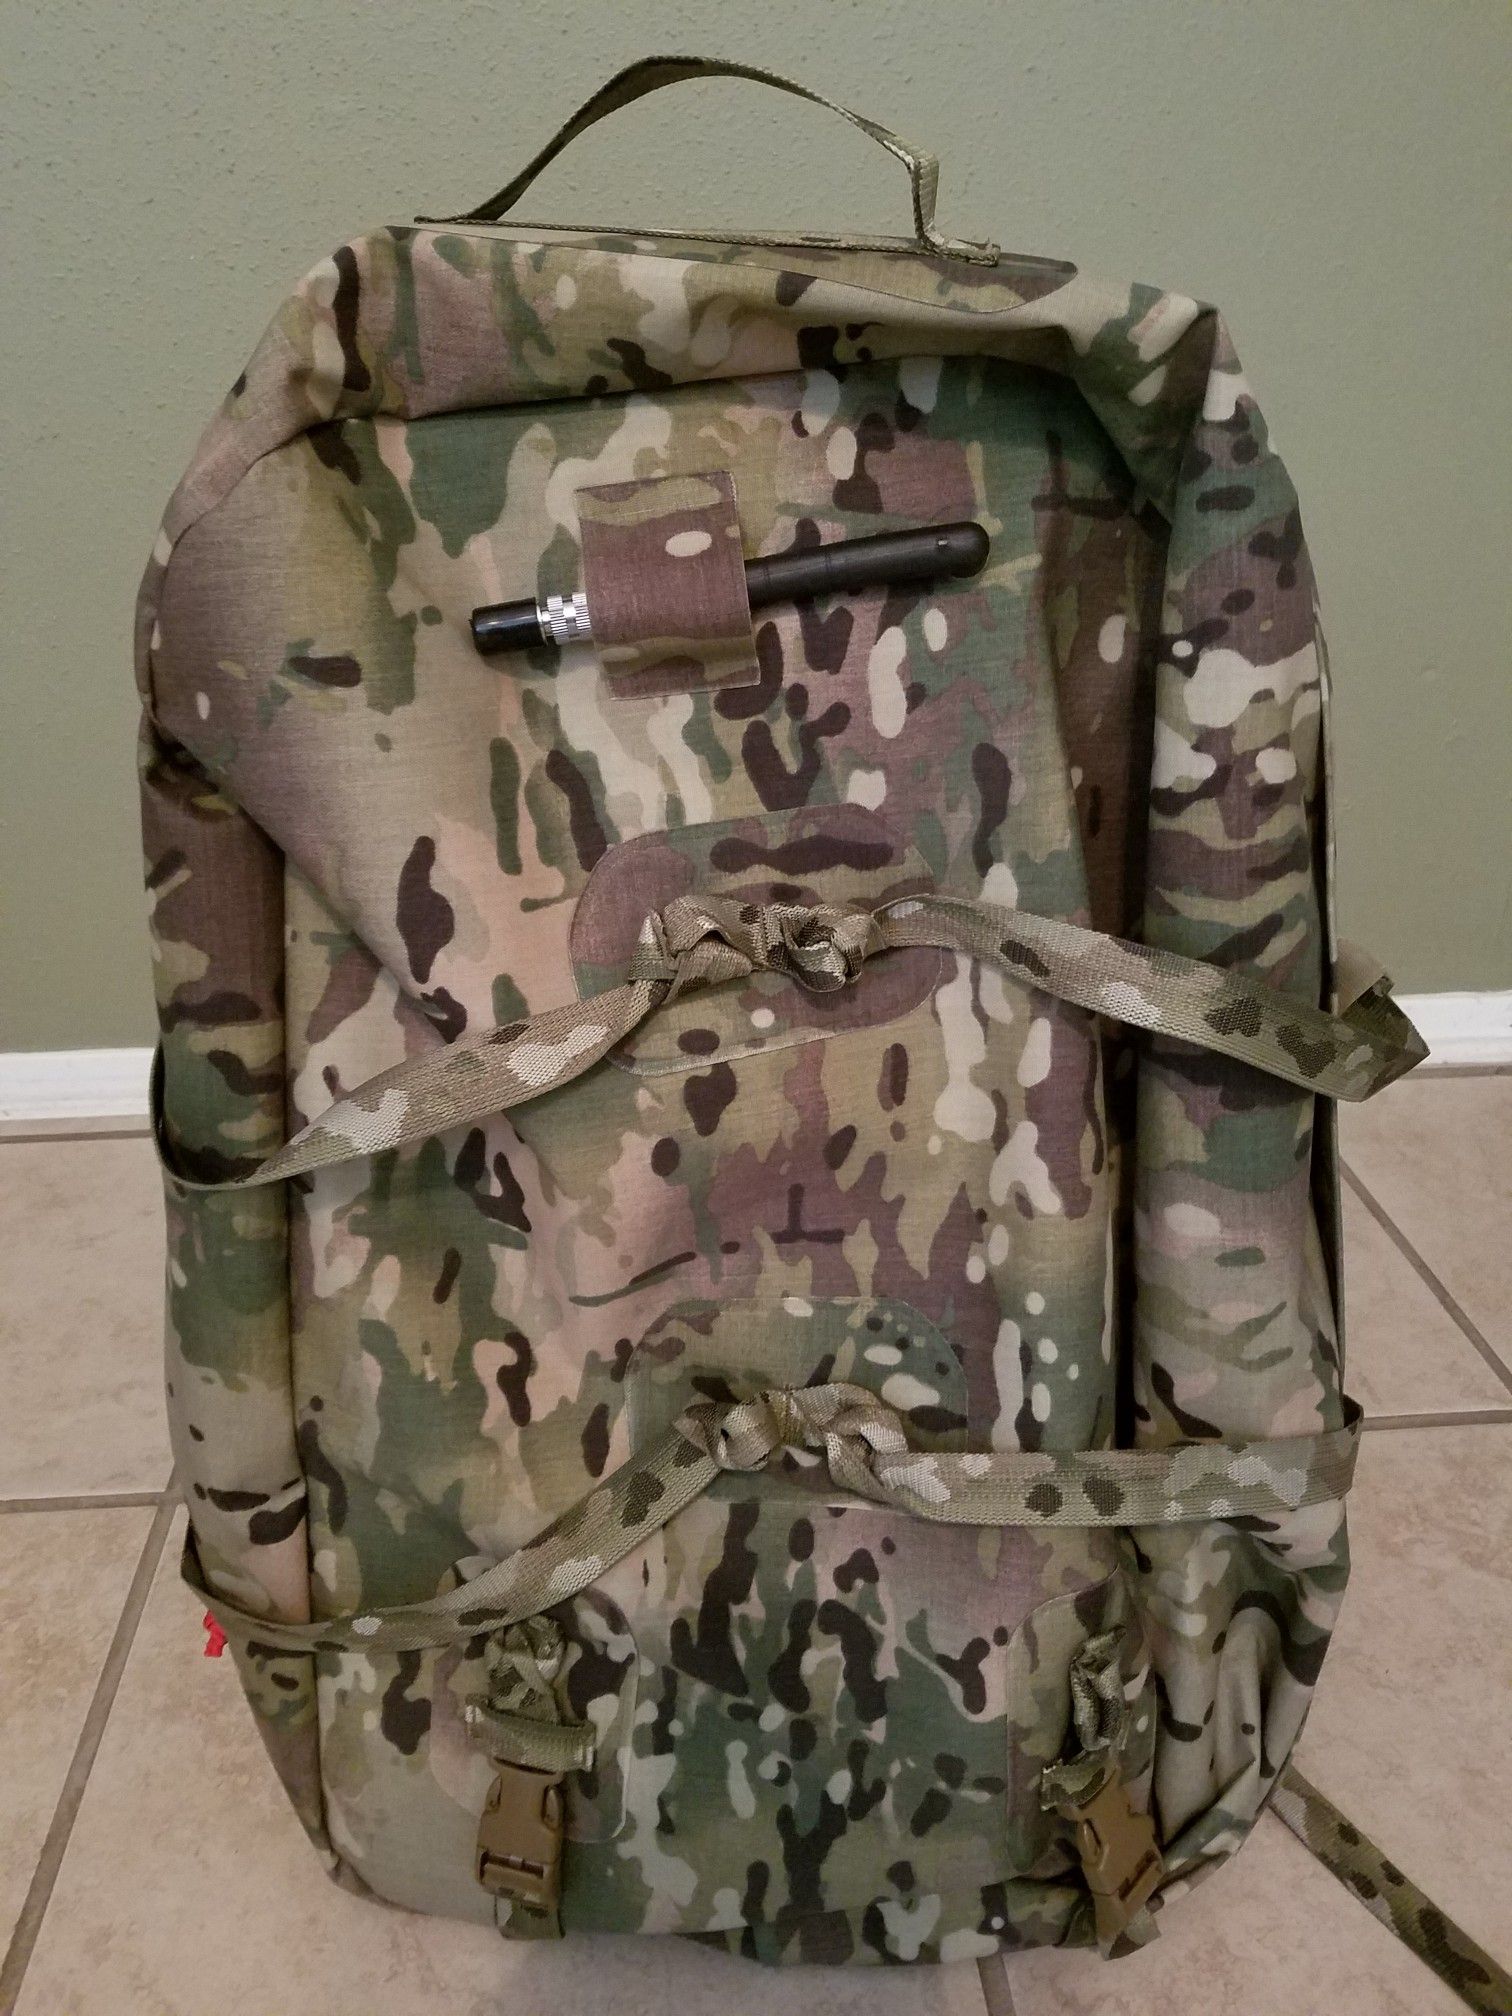 Matbock Mr. Dry 2.0 tactical backpack